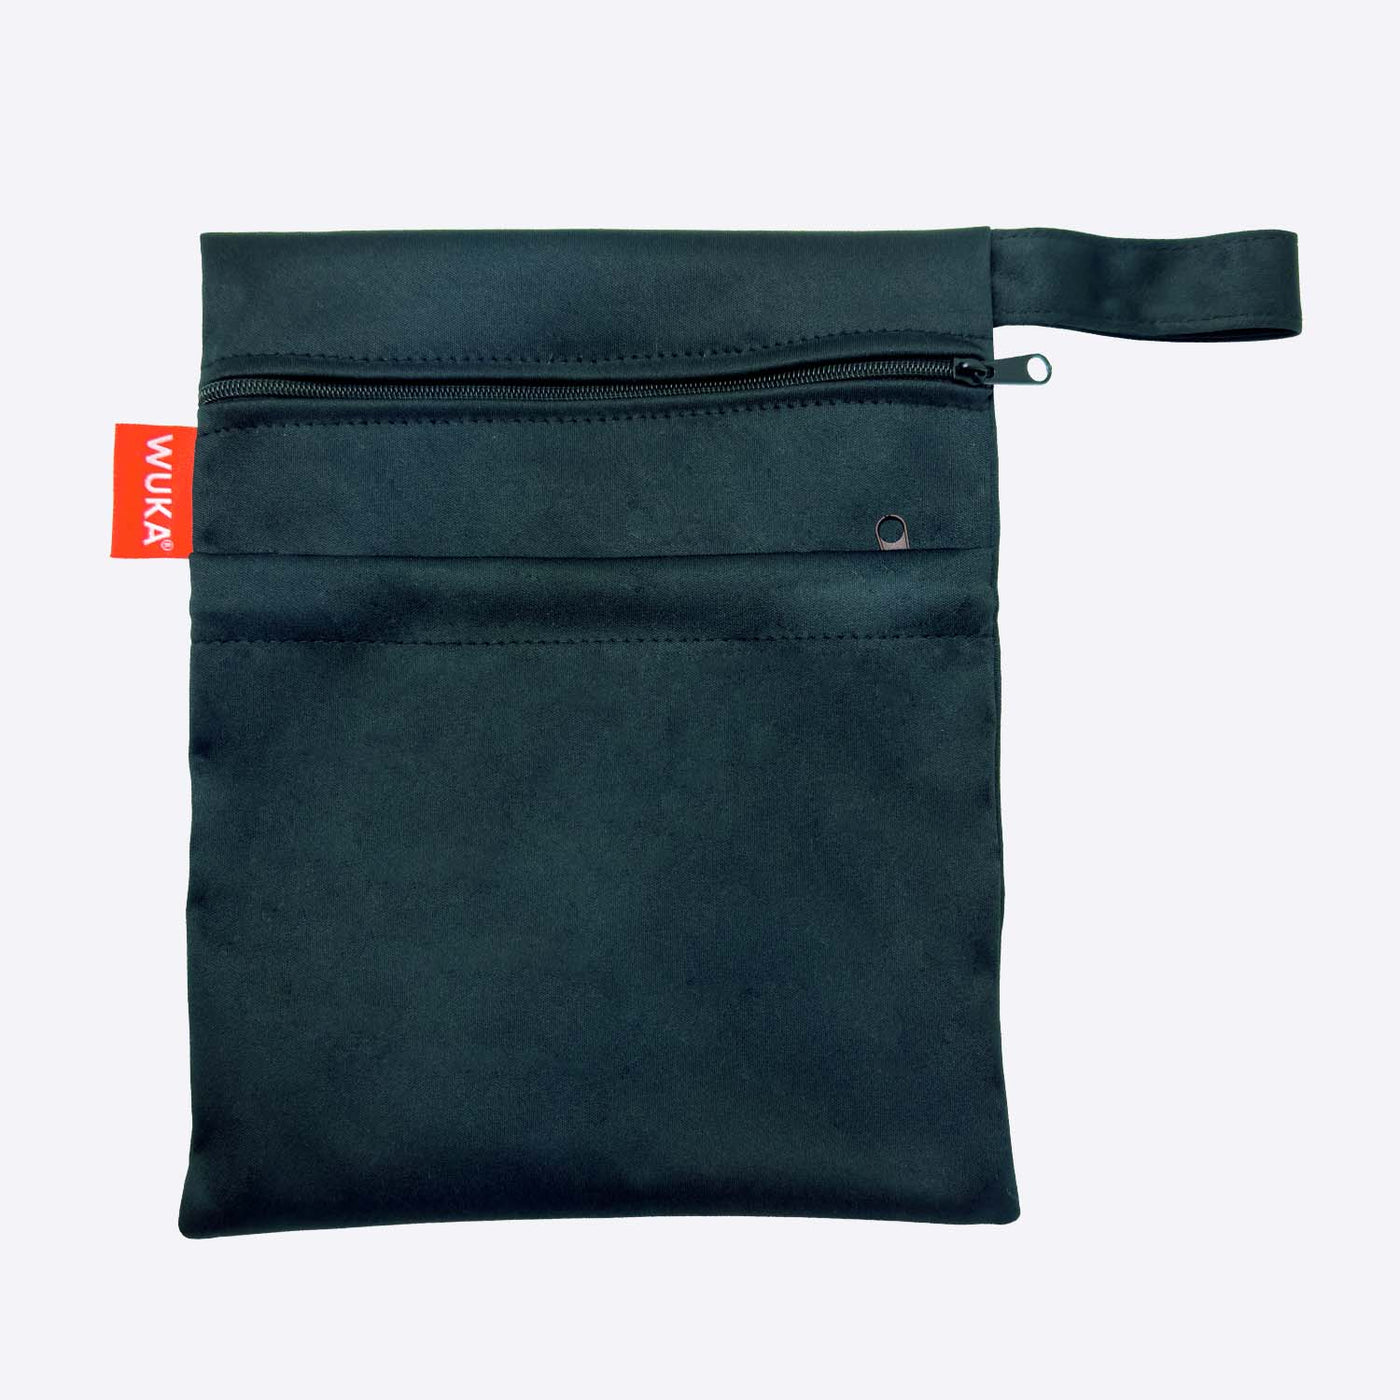 WUKA Period Teen Sleep Set 4 Pack Two Pocket Change Bag Style Black Colour